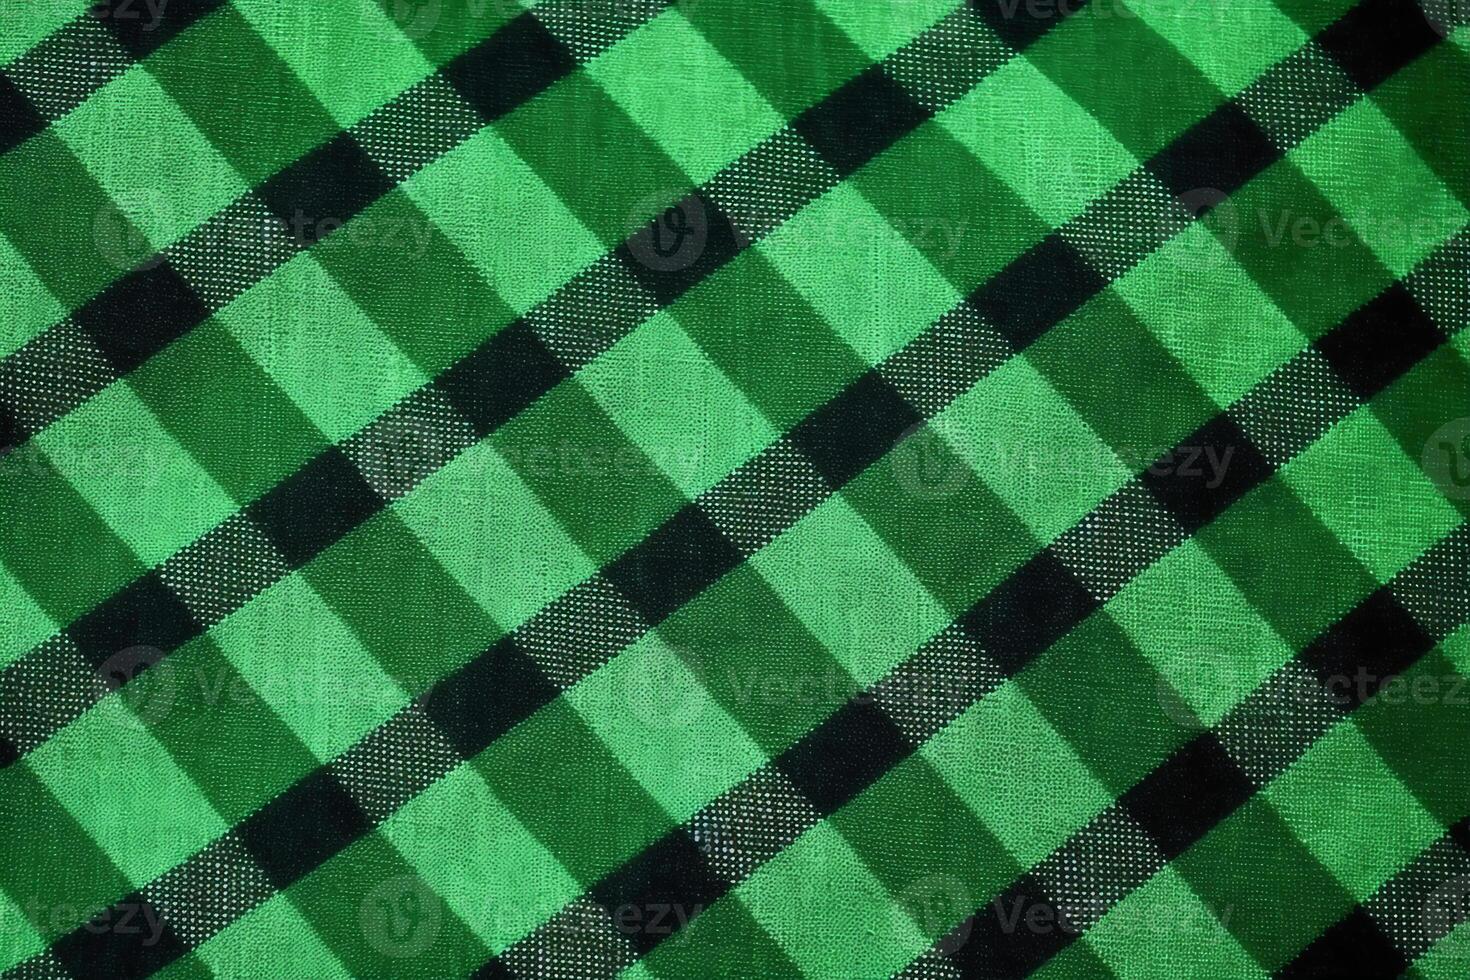 green fabric textile pattern, plaid background, linen cotton. photo